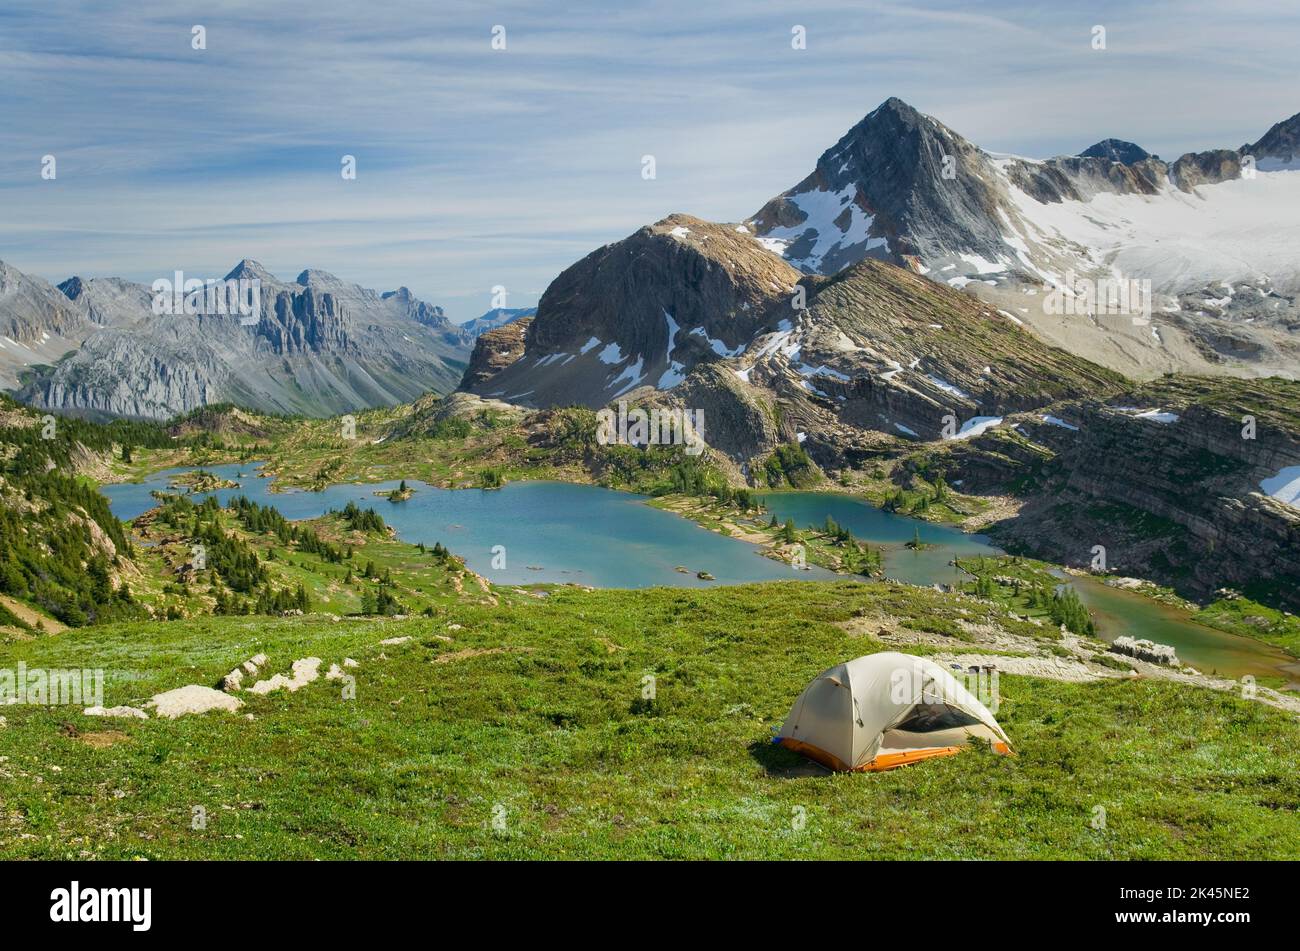 Campsite above Limestone Lakes Basin, Mount Abruzzi is in the background, Stock Photo